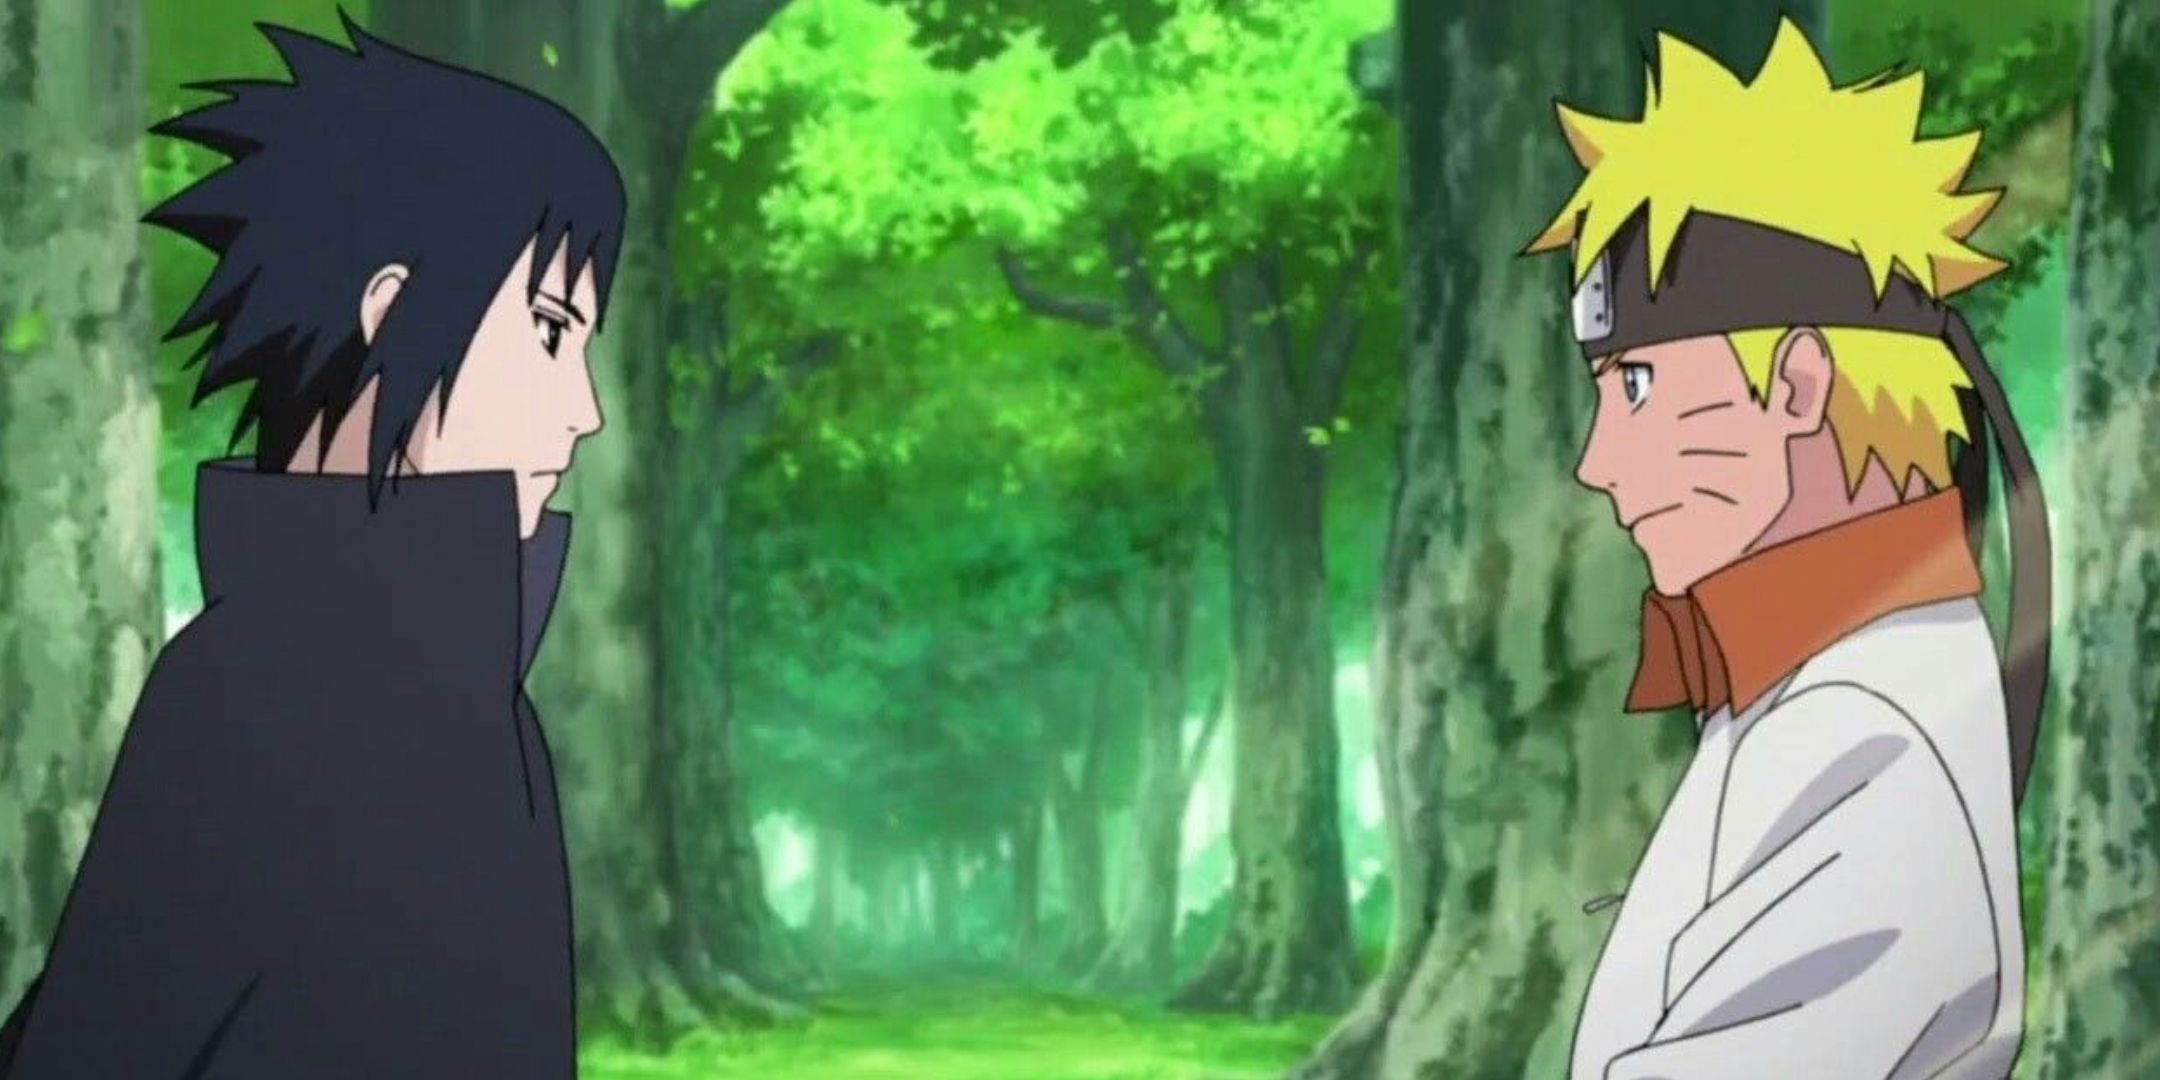 Sasuke and Naruto talk in the woods in Naruto Shippuden